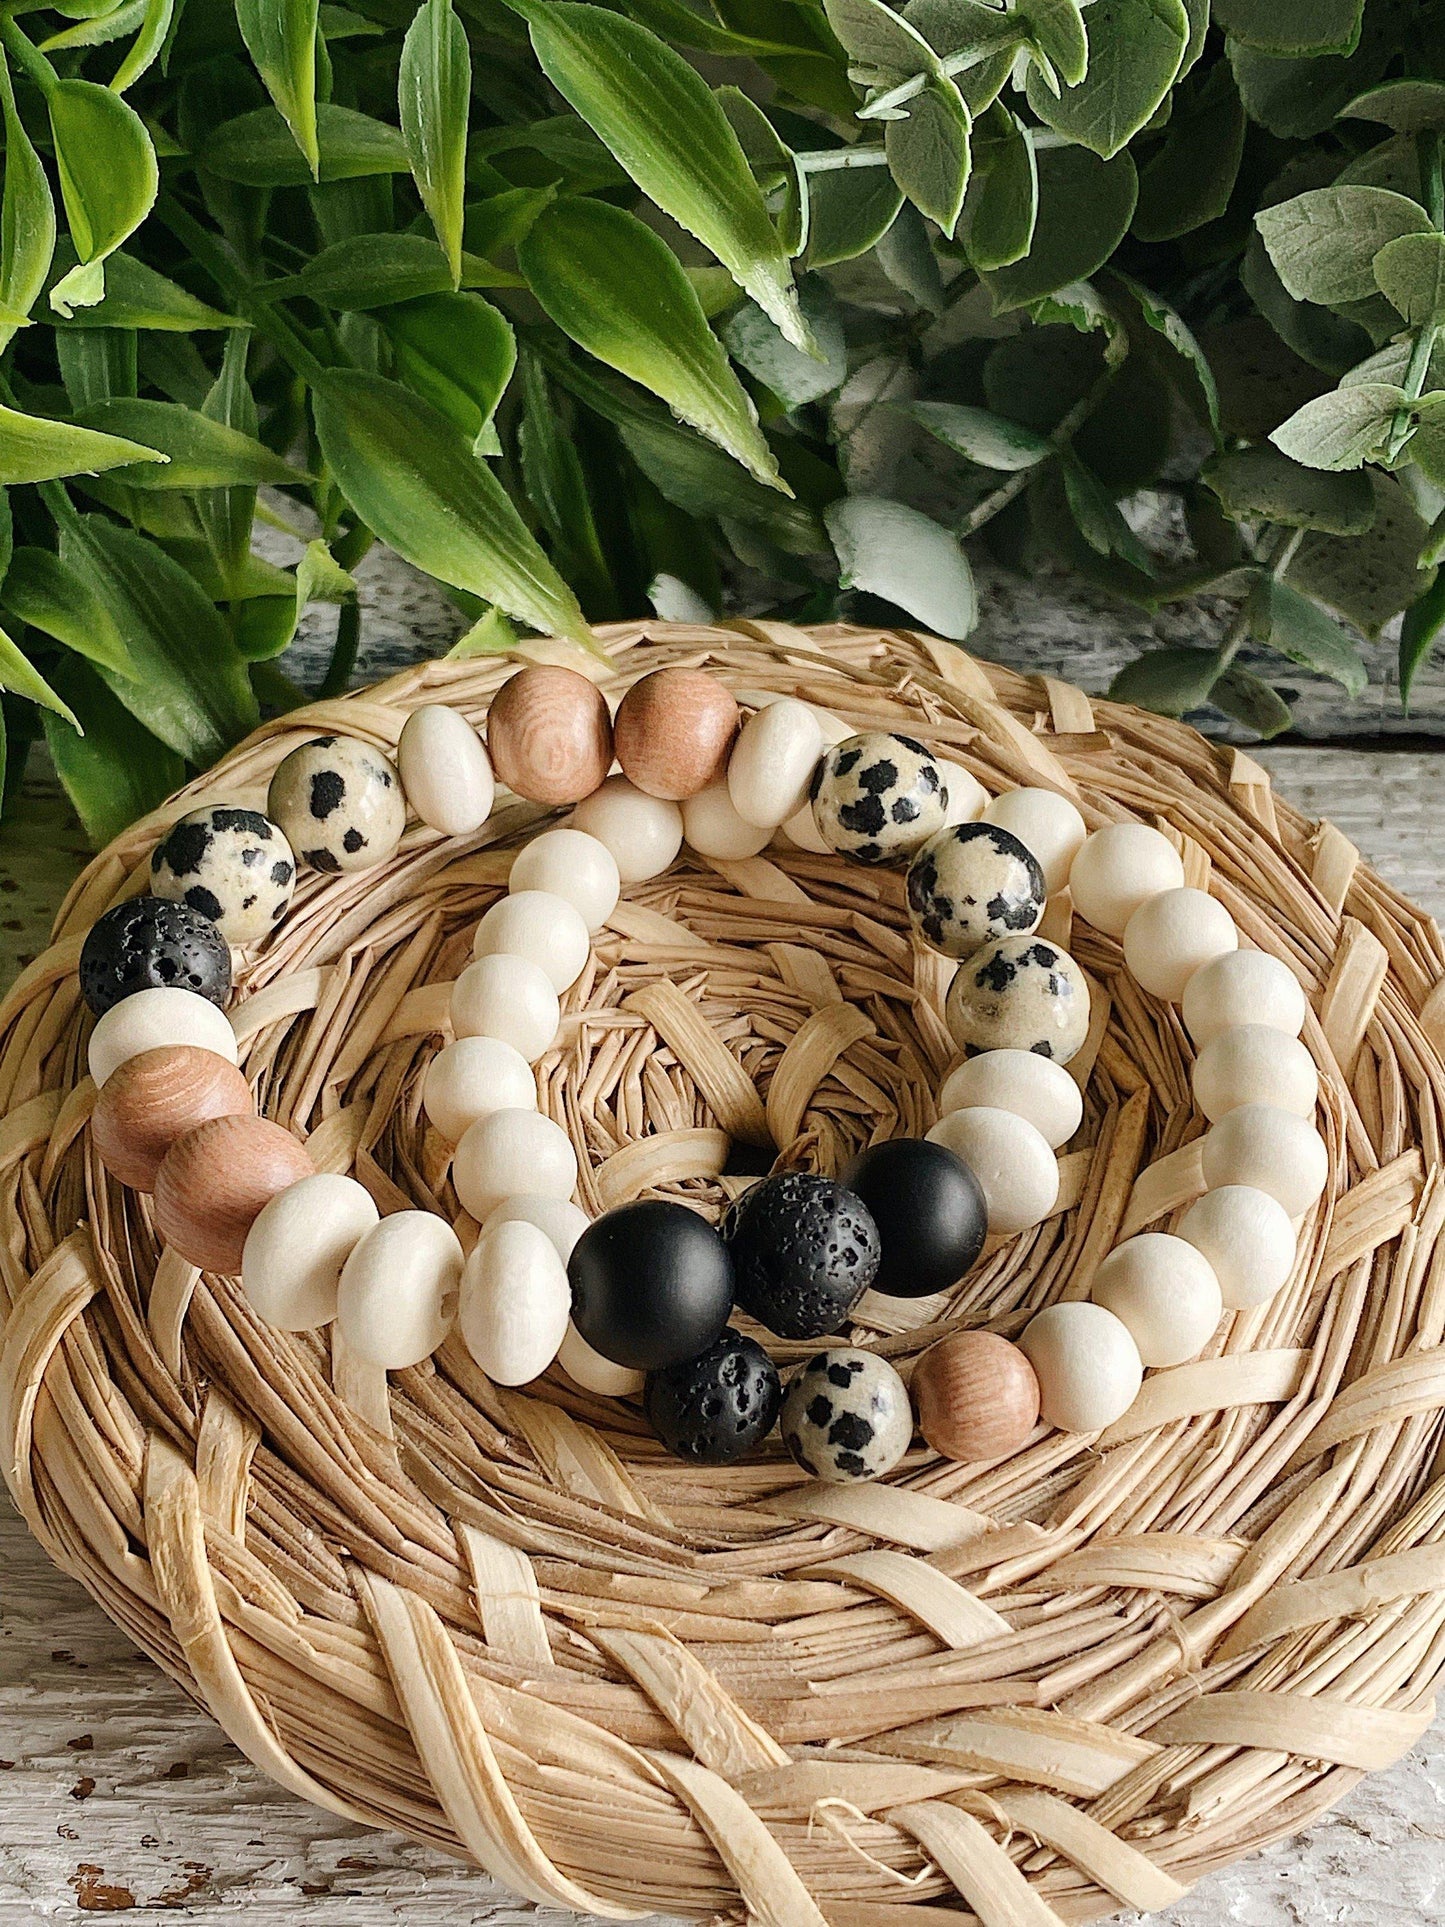 Dalmatian Jasper + White Wood  + Matte Onyx bead bracelets